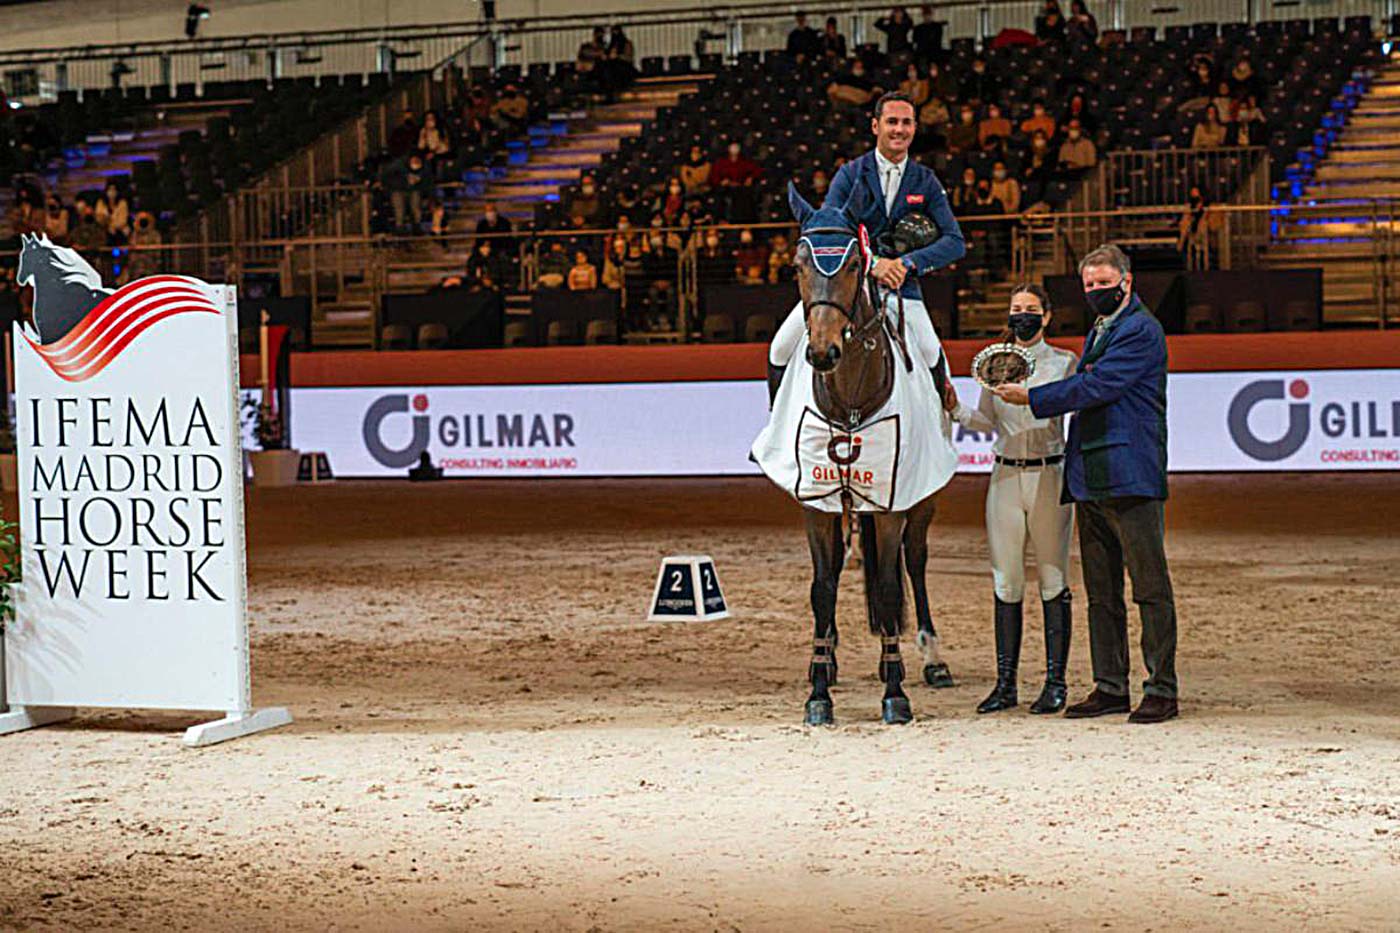 GILMAR vuelve a IFEMA Madrid Horse Week